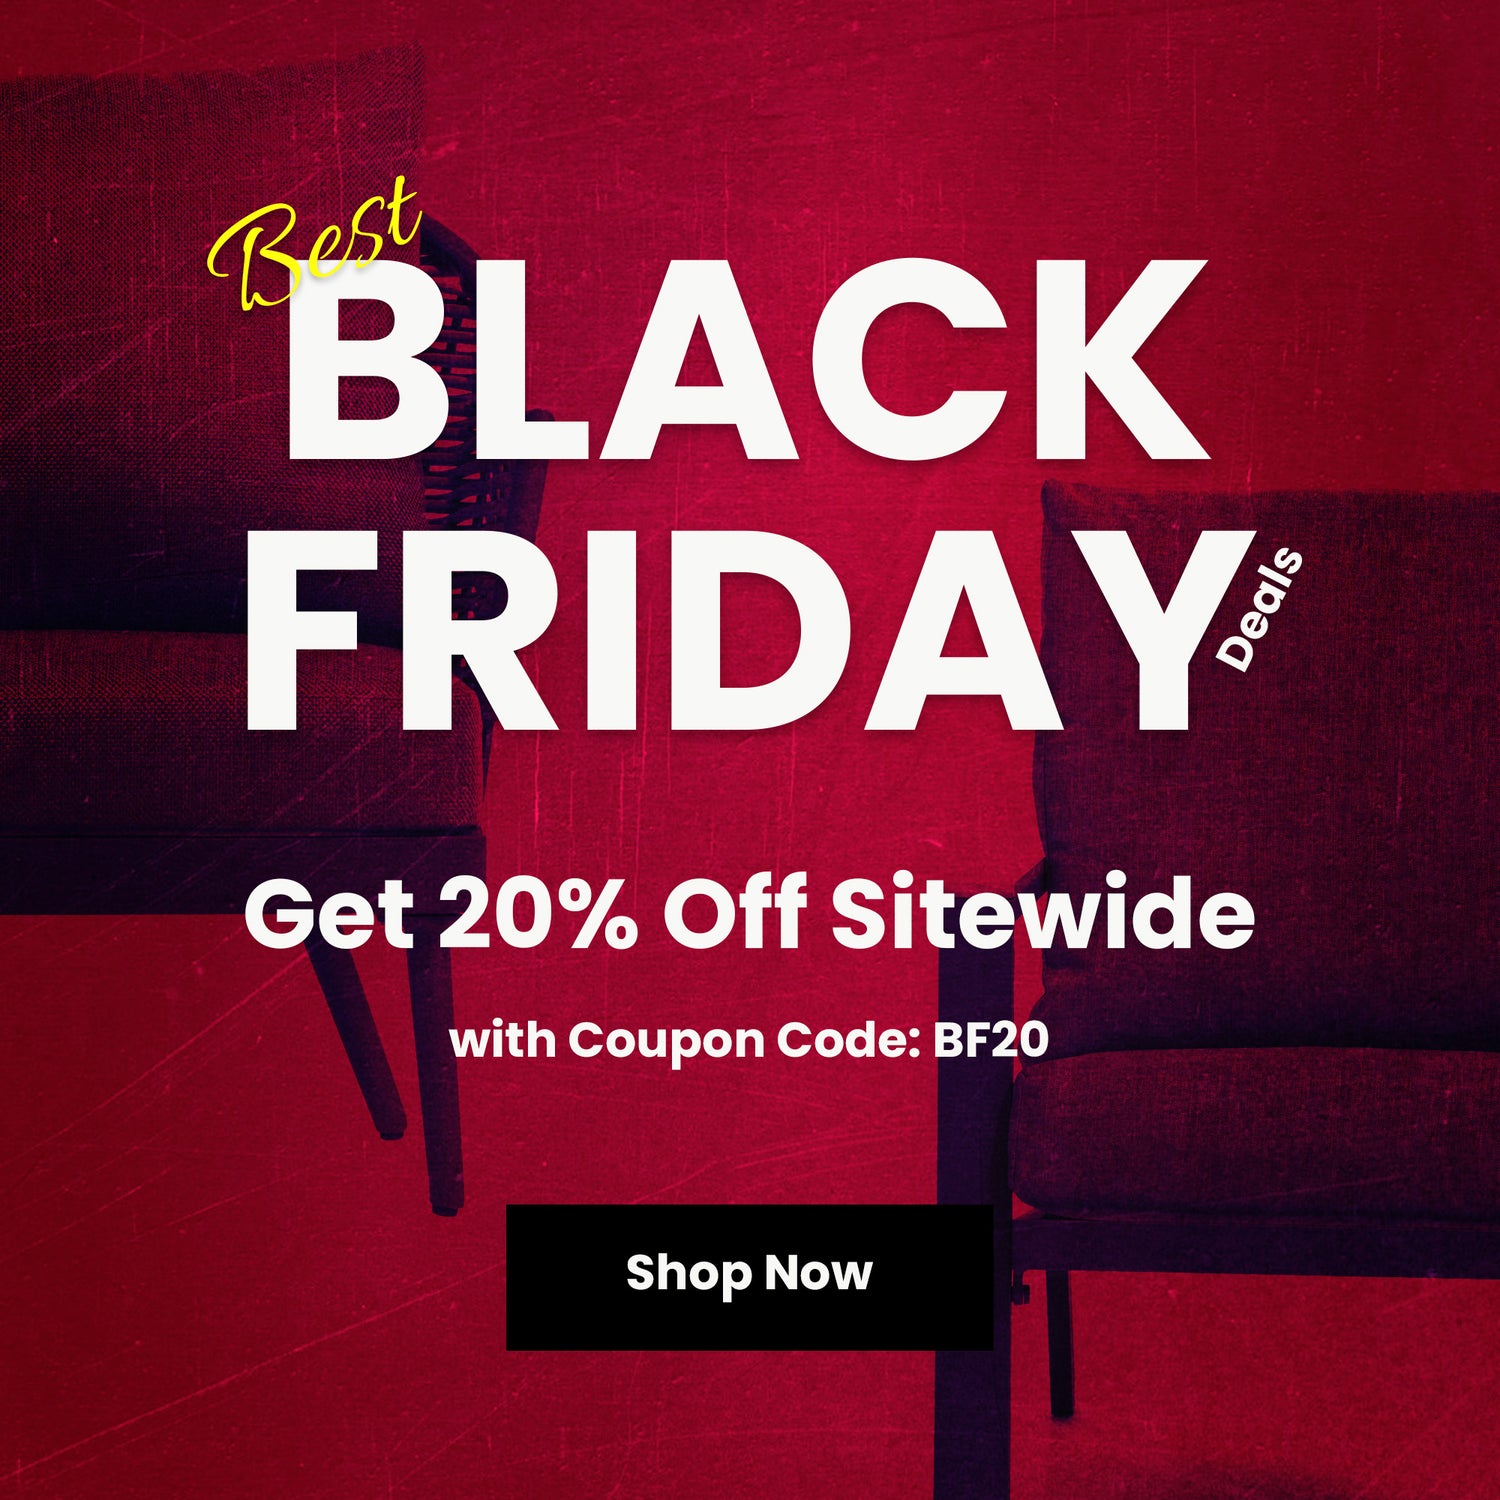 Black Friday Big Sale On Jardina, 20% Off Sitewide